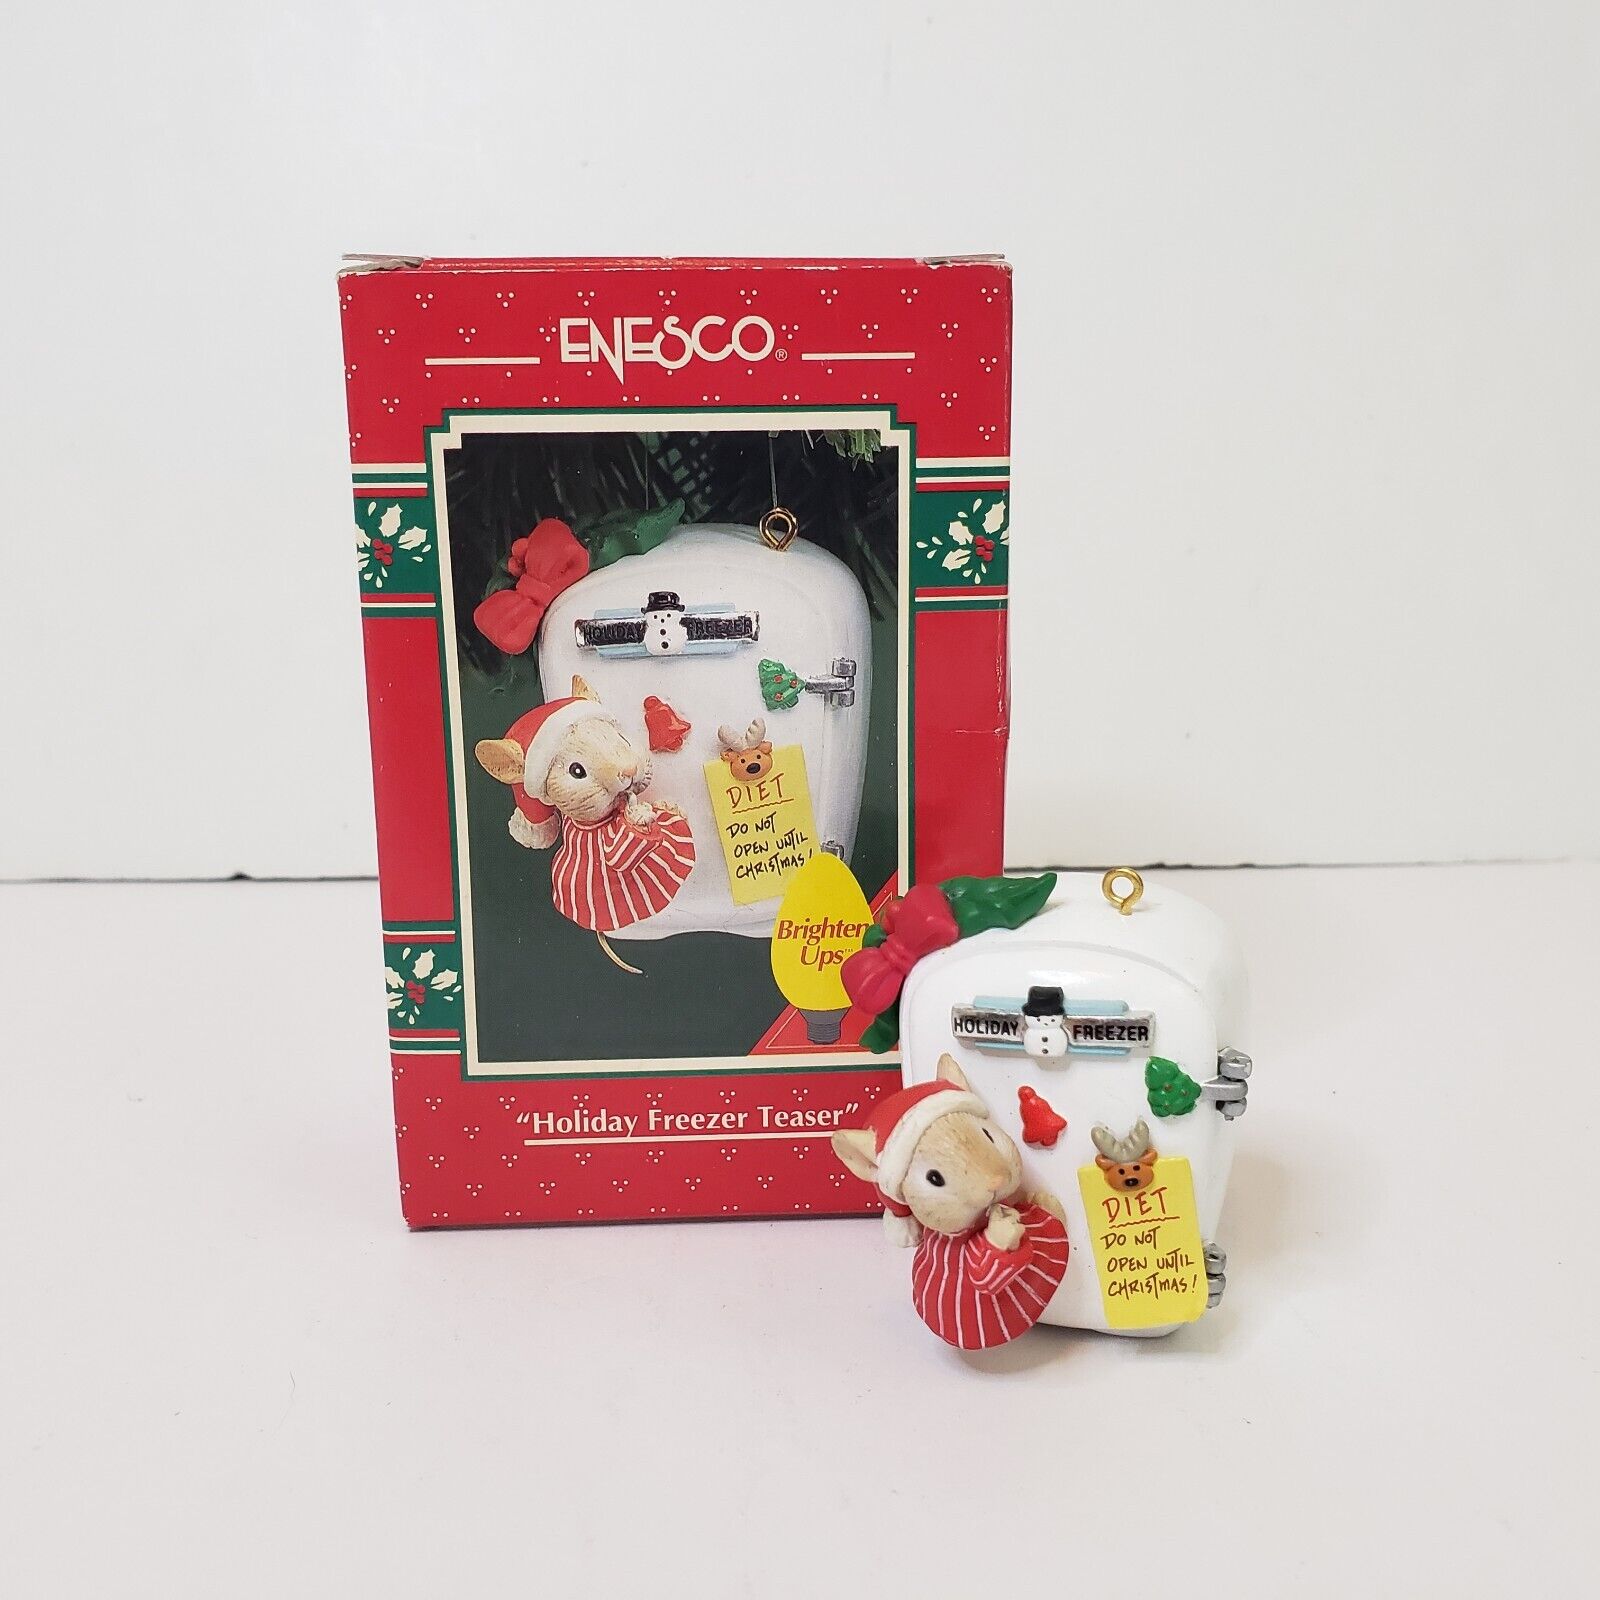 Enesco Holiday Freezer Teaser Christmas Ornament 1994 M. Silmore Collection Vtg